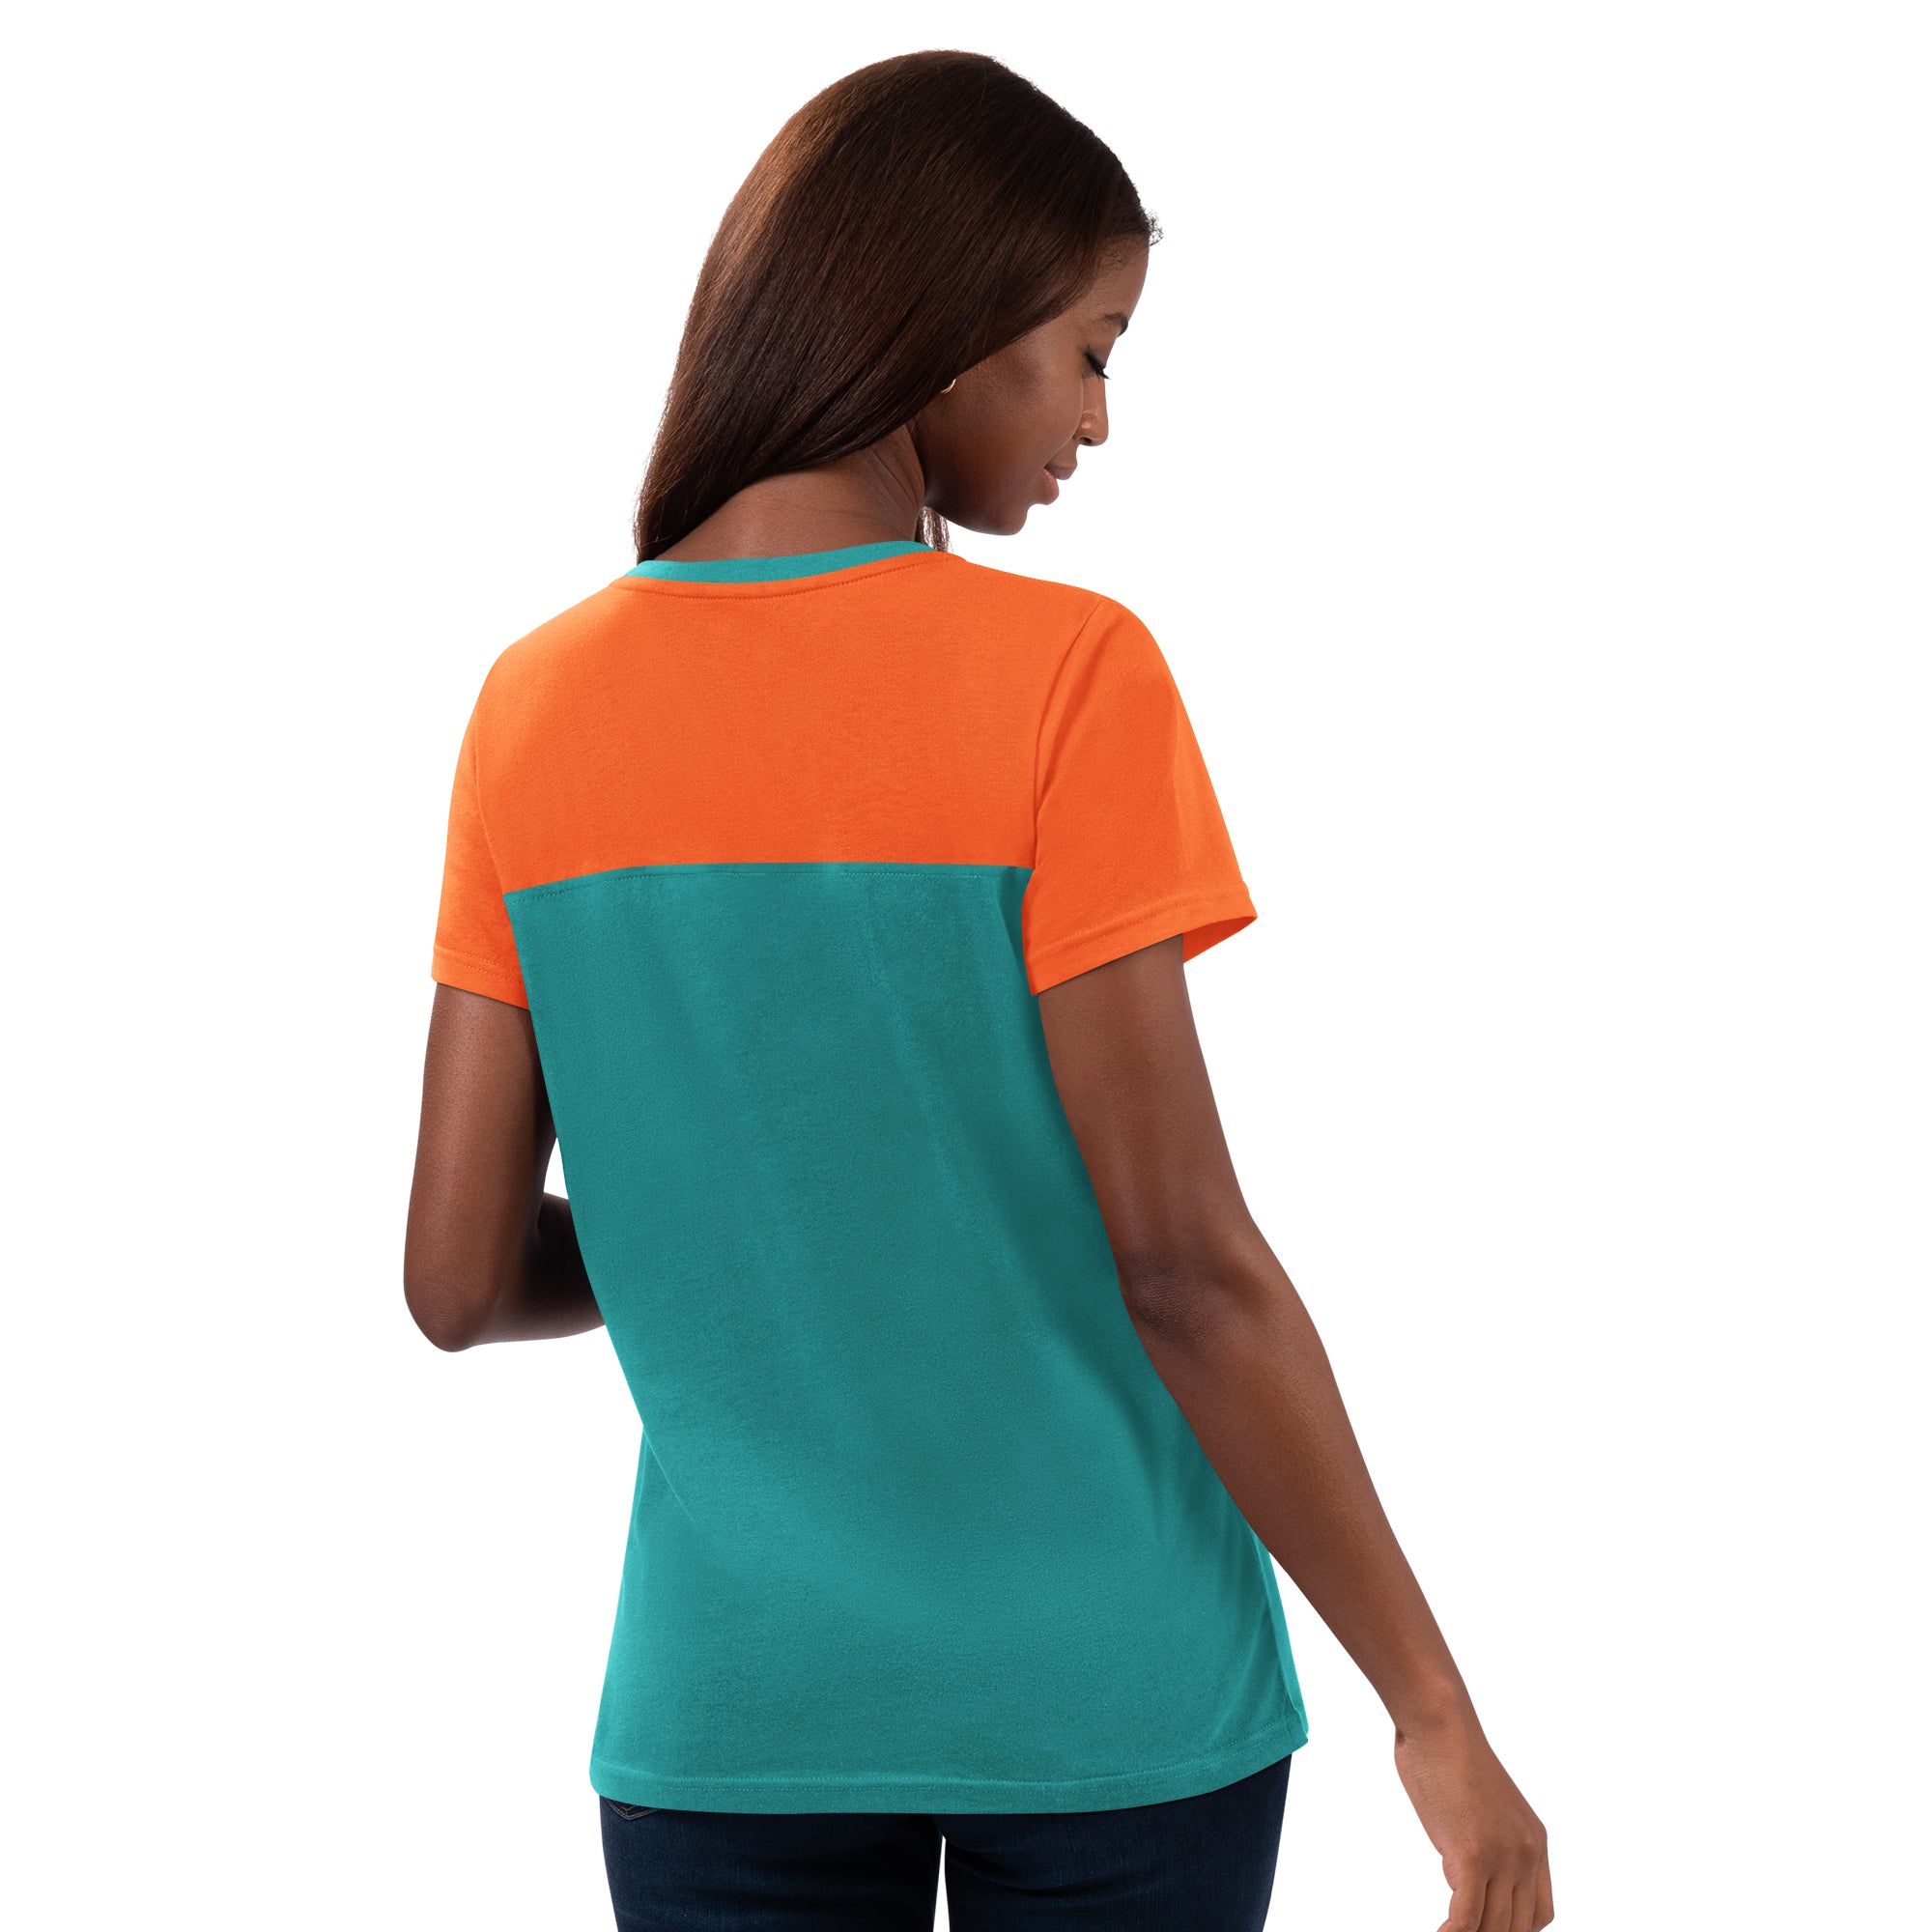 Miami Dolphins G-III 4Her Women's Cheer Color Blocked T-Shirt - Aqua / Orange